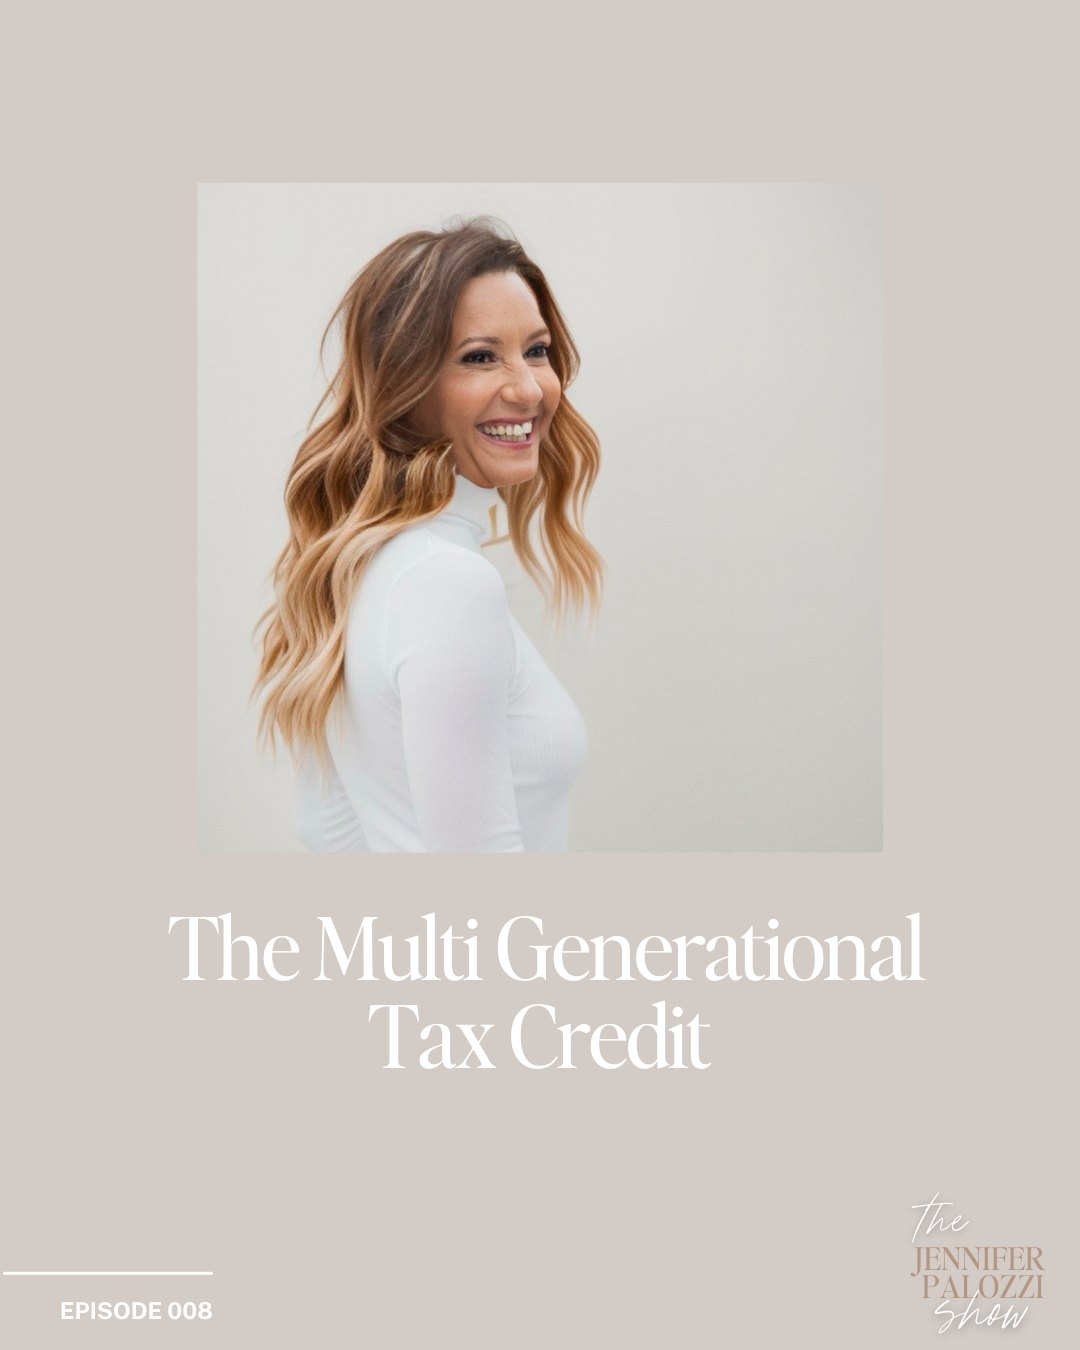 Episode 008 of the Jennifer Palozzi Show - The Multi Generational Tax Credit